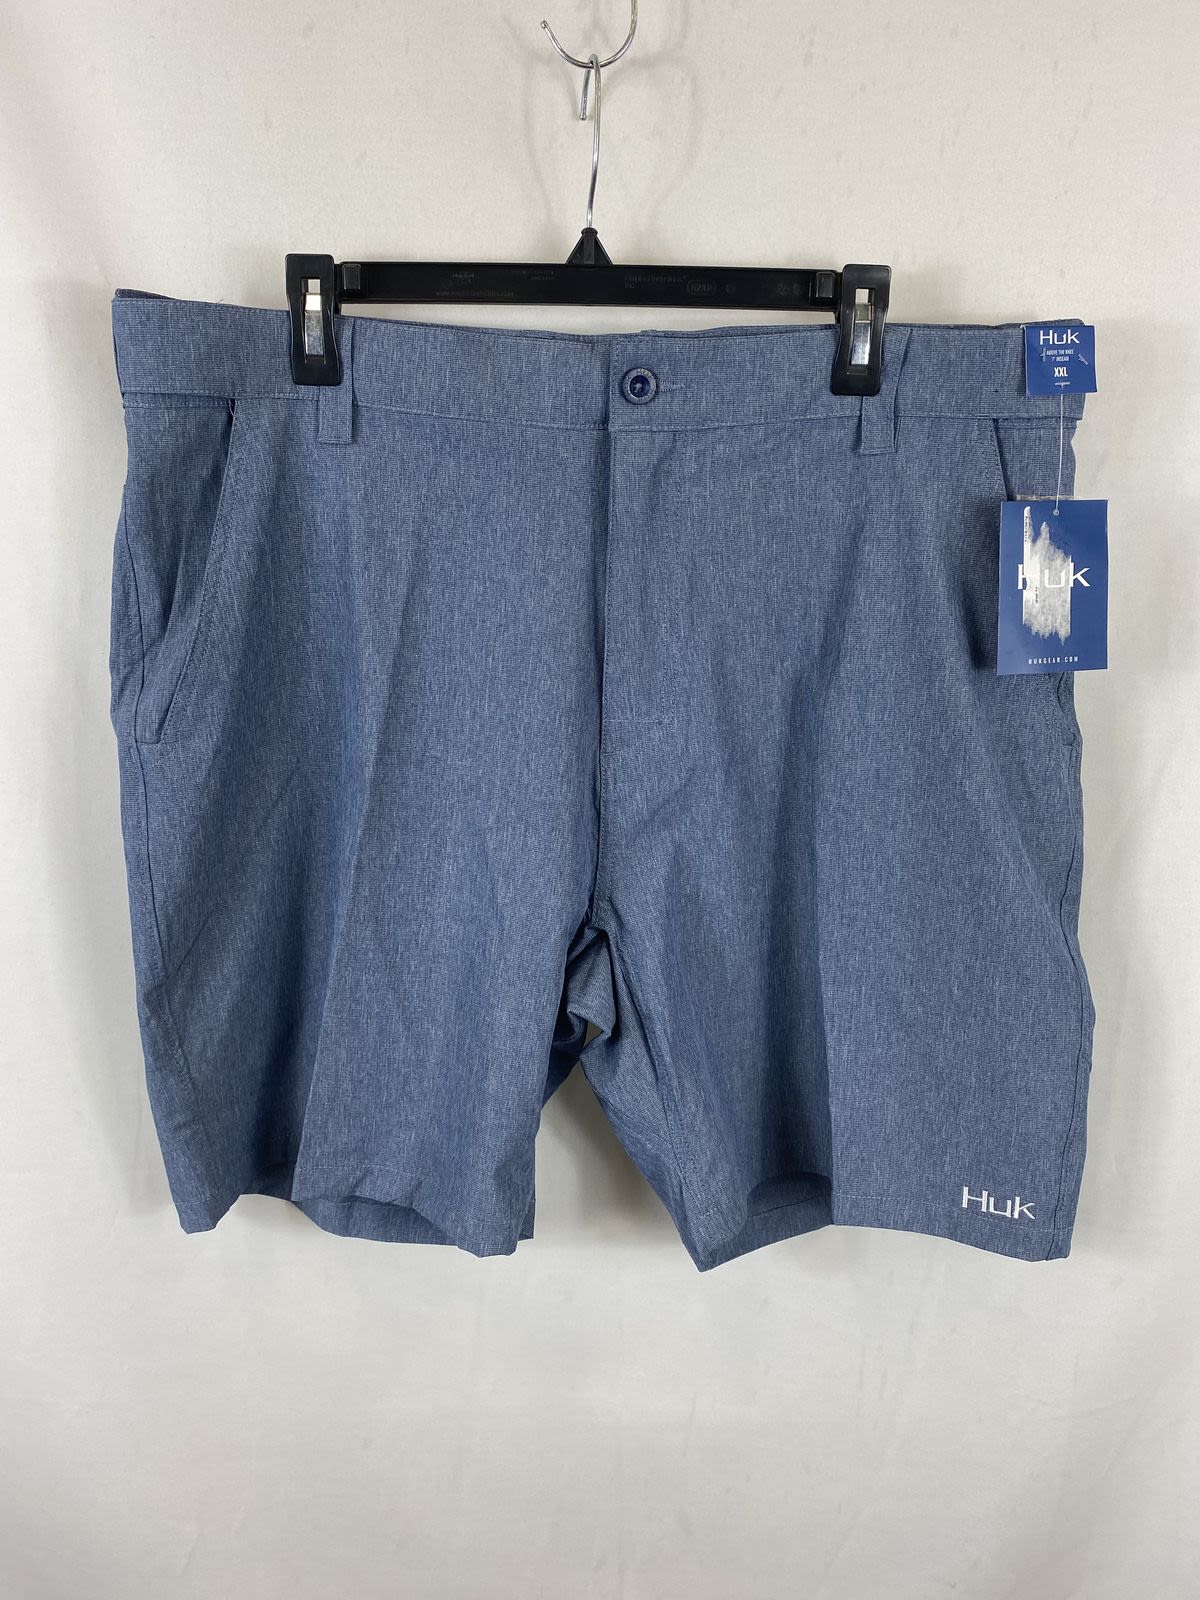 Buy the HUK Blue Shorts - Size XXL